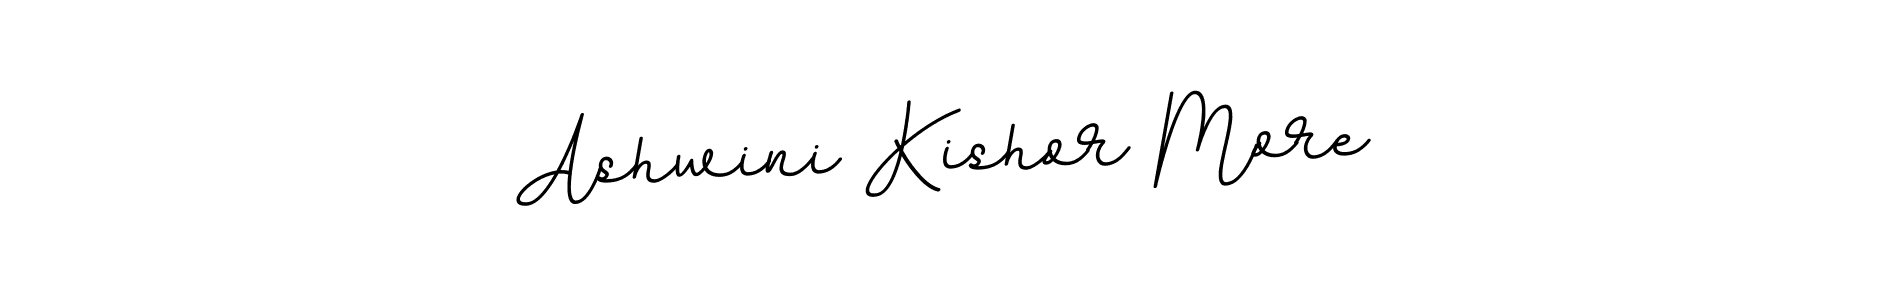 How to Draw Ashwini Kishor More signature style? BallpointsItalic-DORy9 is a latest design signature styles for name Ashwini Kishor More. Ashwini Kishor More signature style 11 images and pictures png